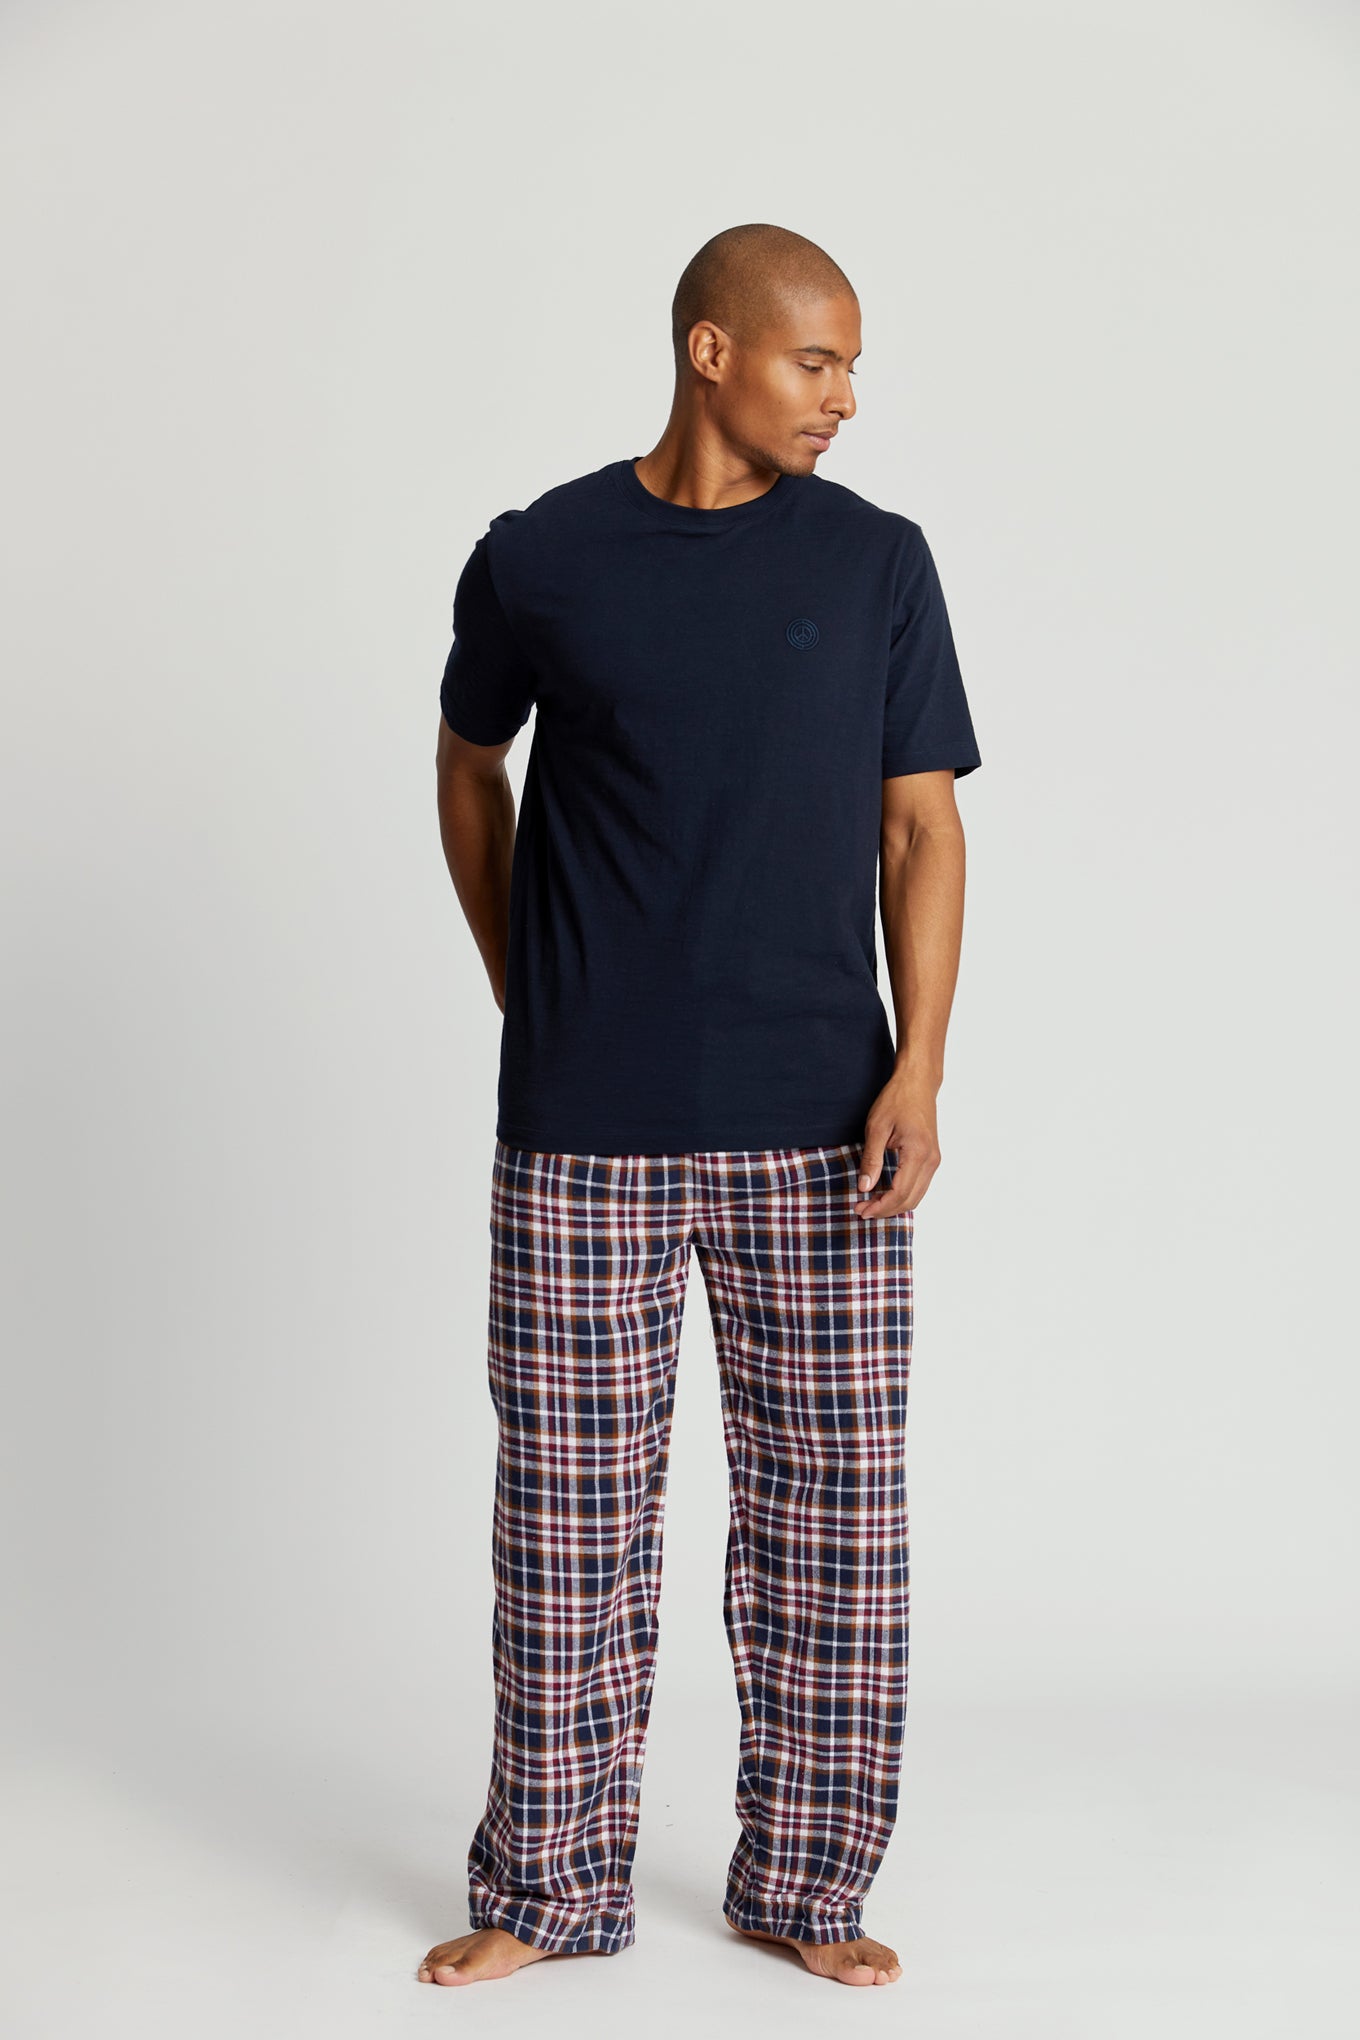 JIM JAM Mens Organic Cotton Pyjama Bottoms Navy, Medium